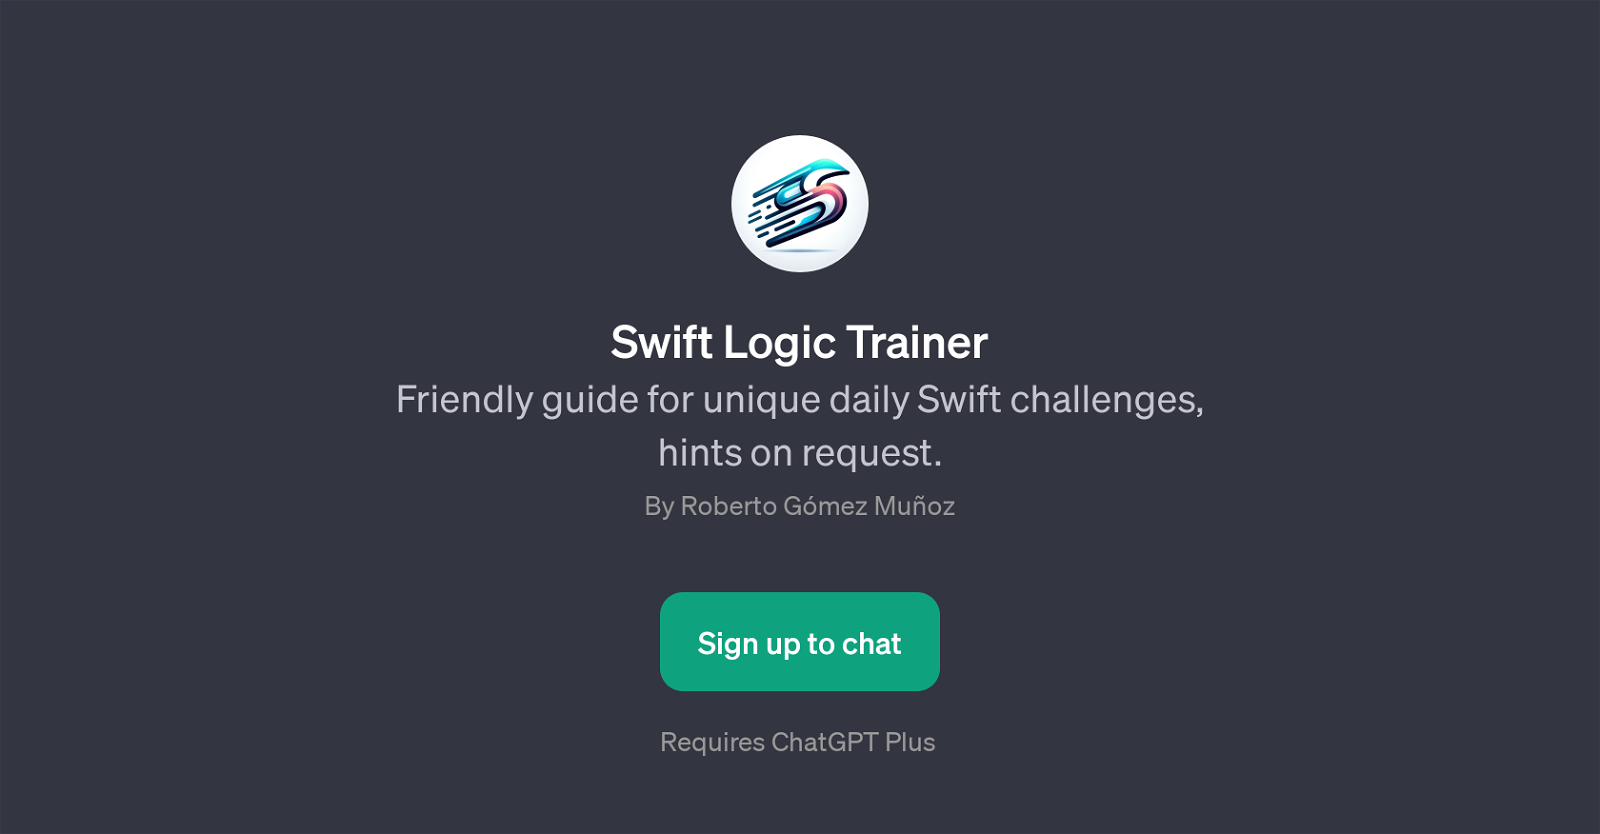 Swift Logic Trainer website